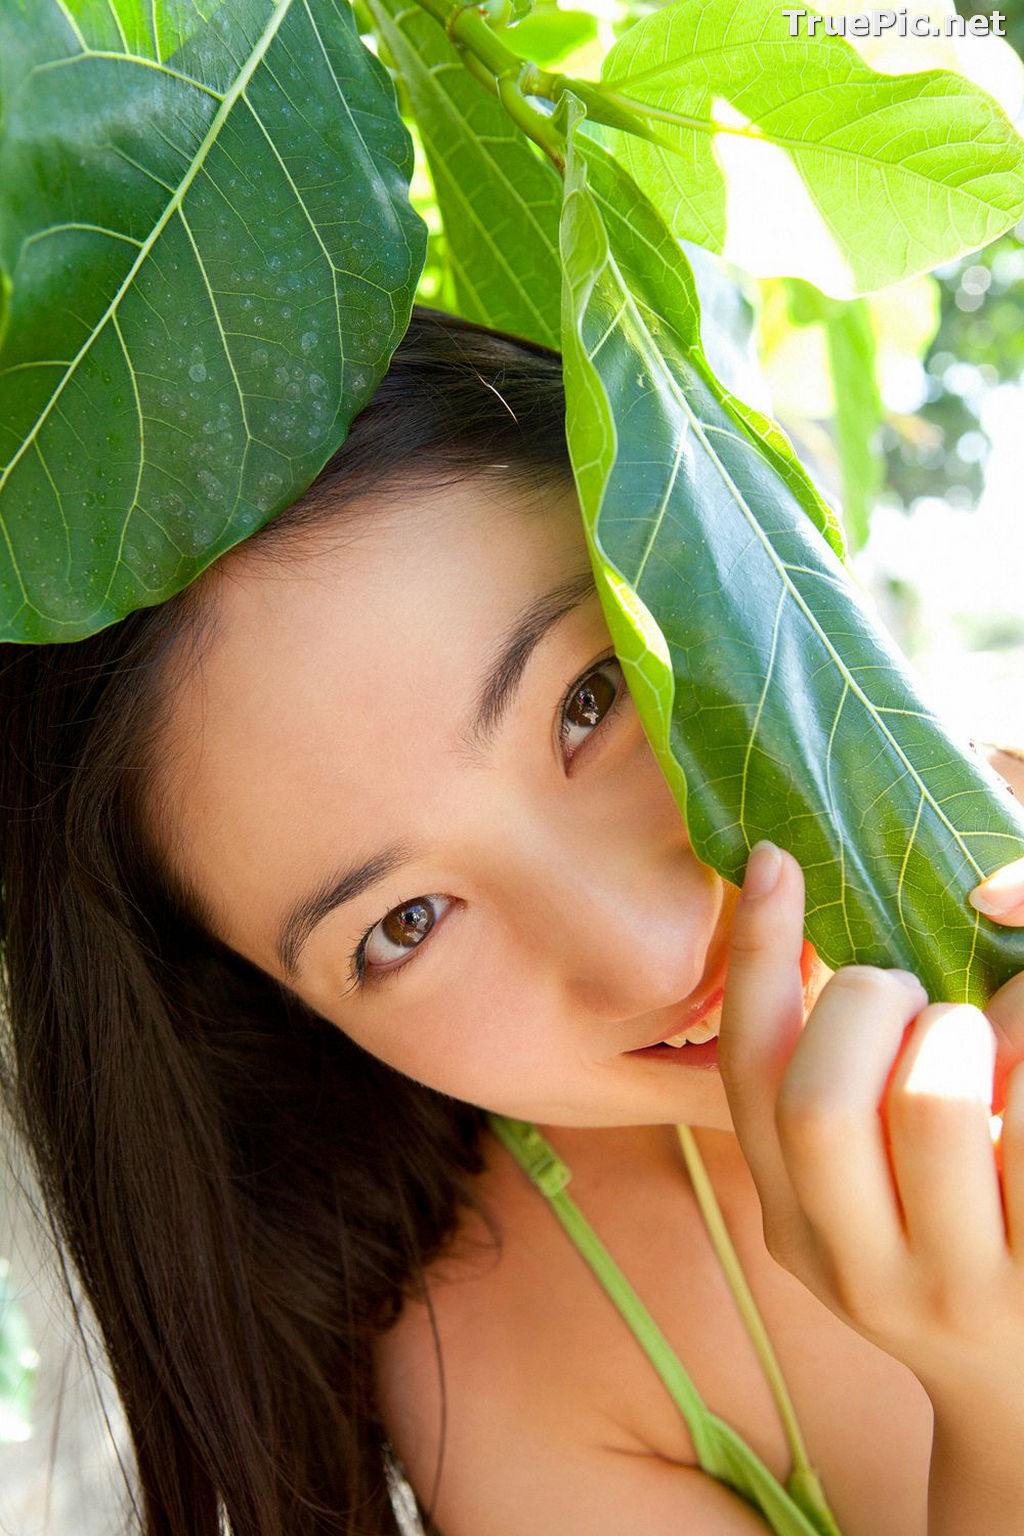 Image [YS Web] Vol.429 - Japanese Actress and Gravure Idol - Irie Saaya - TruePic.net - Picture-68